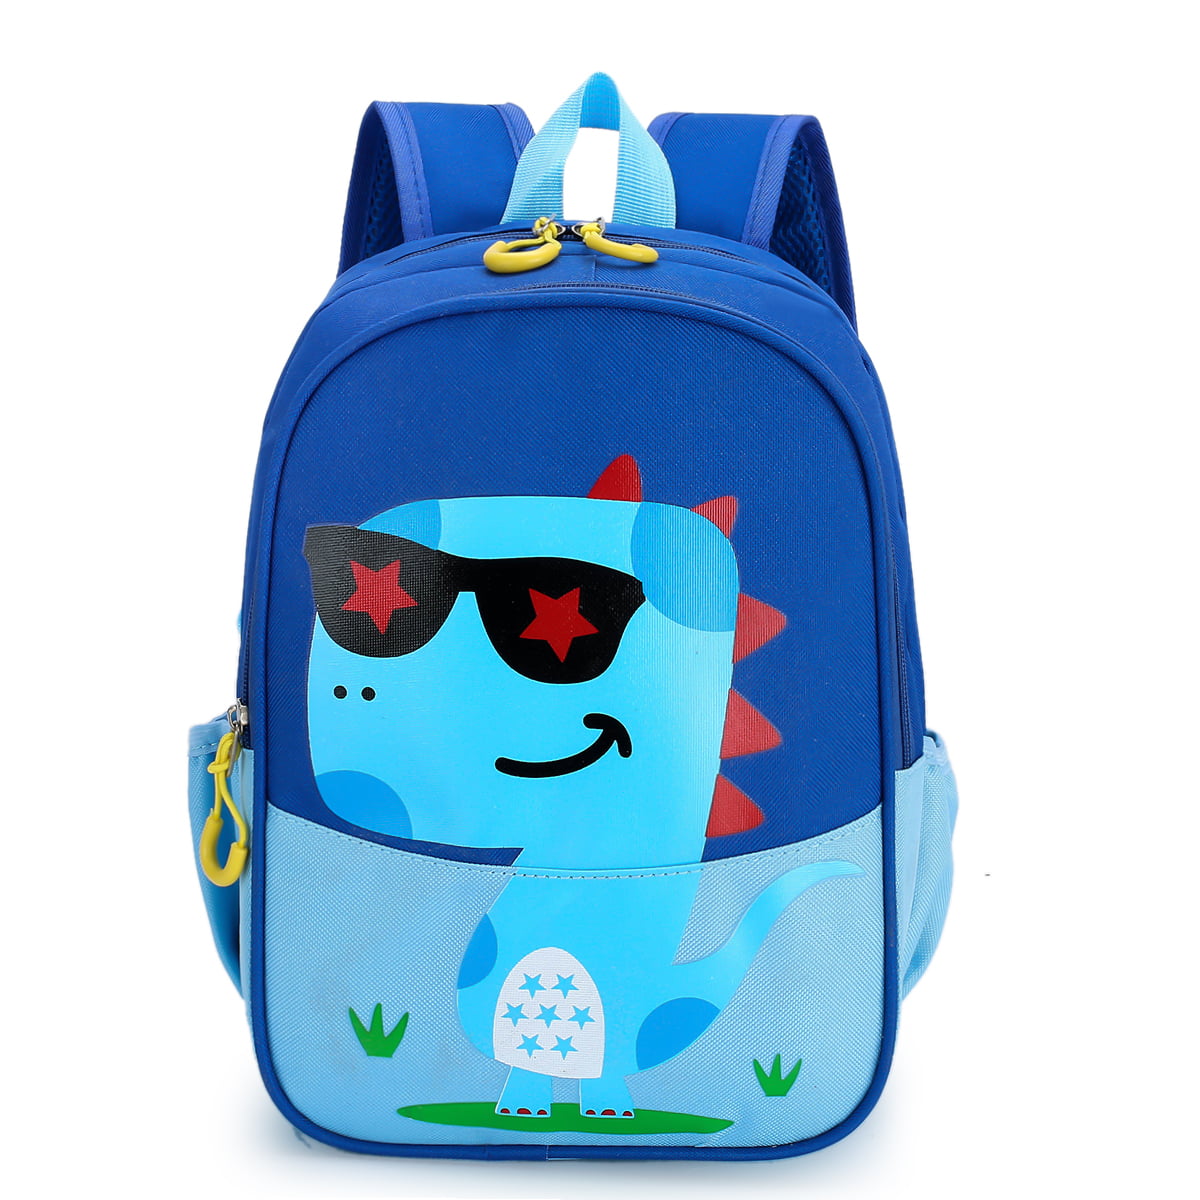 Cartoons Backpack for Boys and Girls Lightweight shoulder bag with Adjustable Padded Straps 